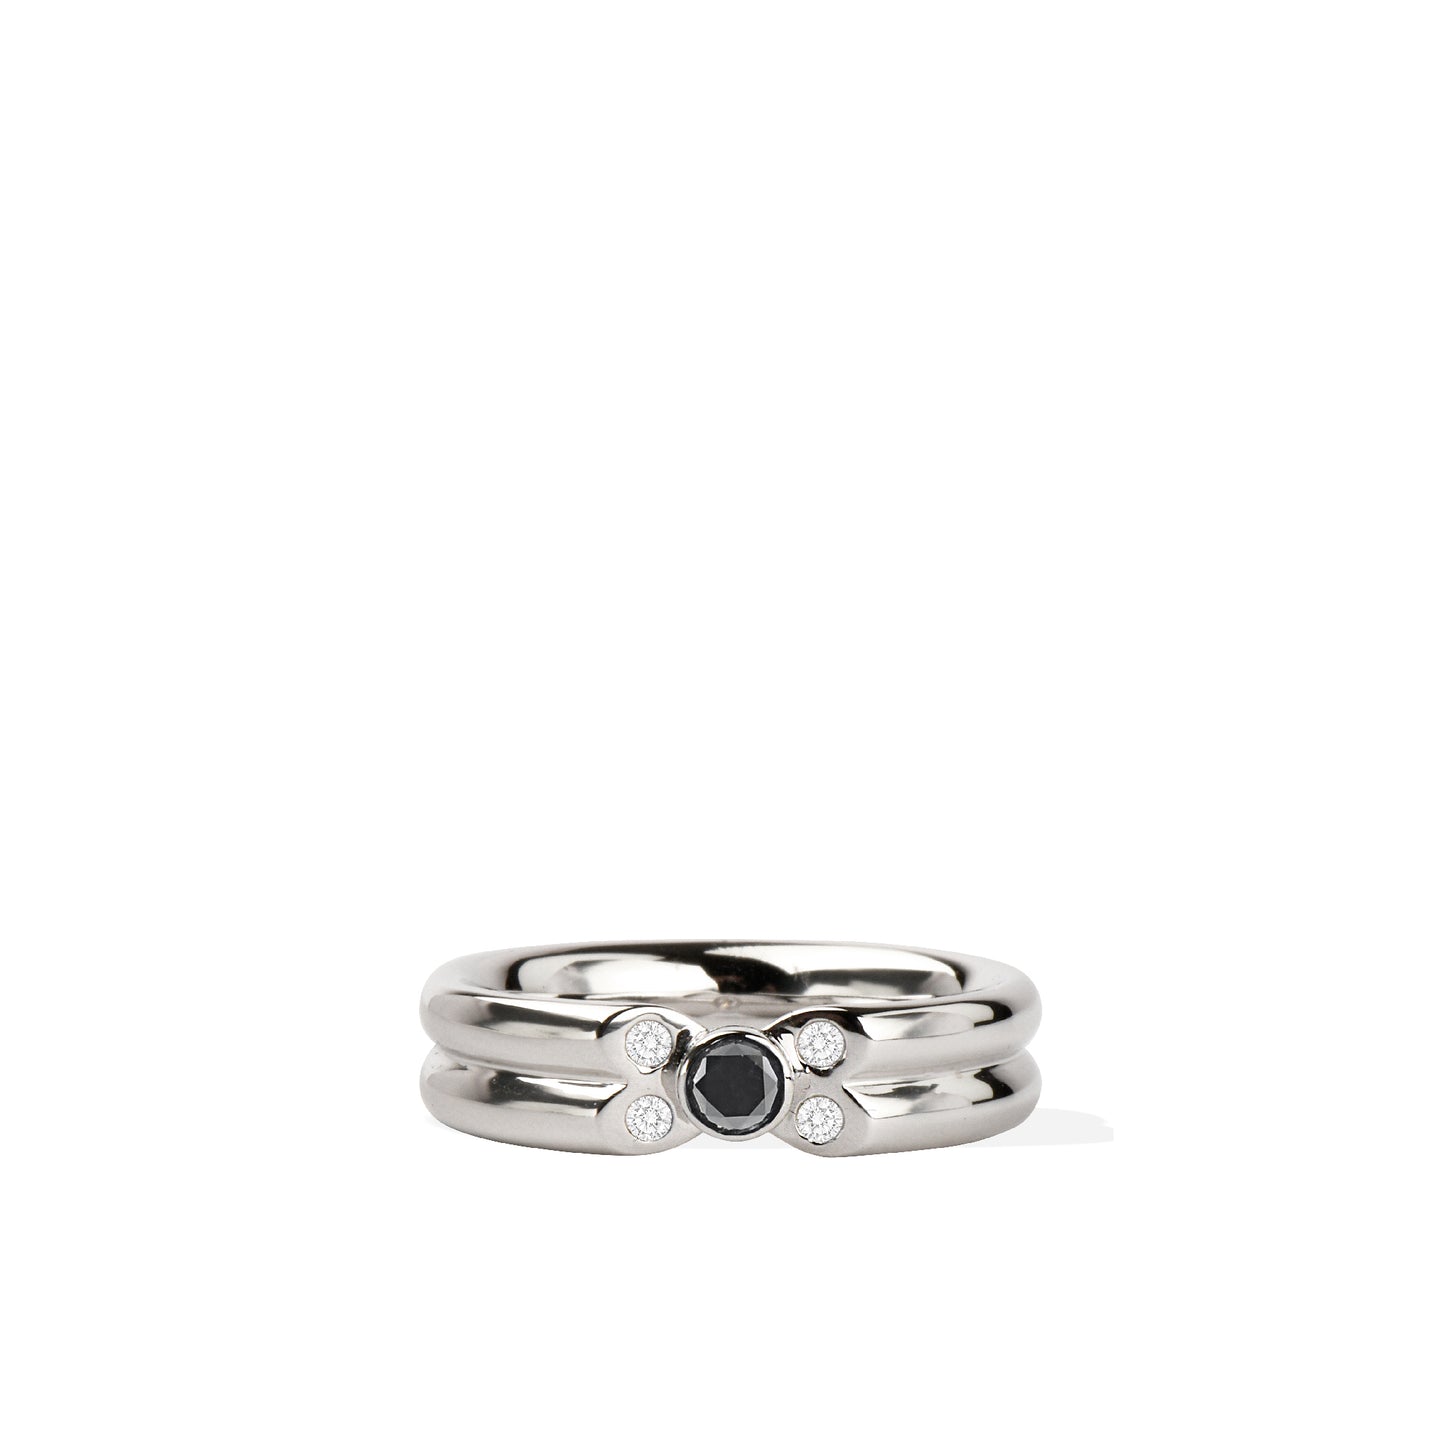 White Gold Black Diamond Ring | Black Diamond Gold Ring with White Diamond Accents